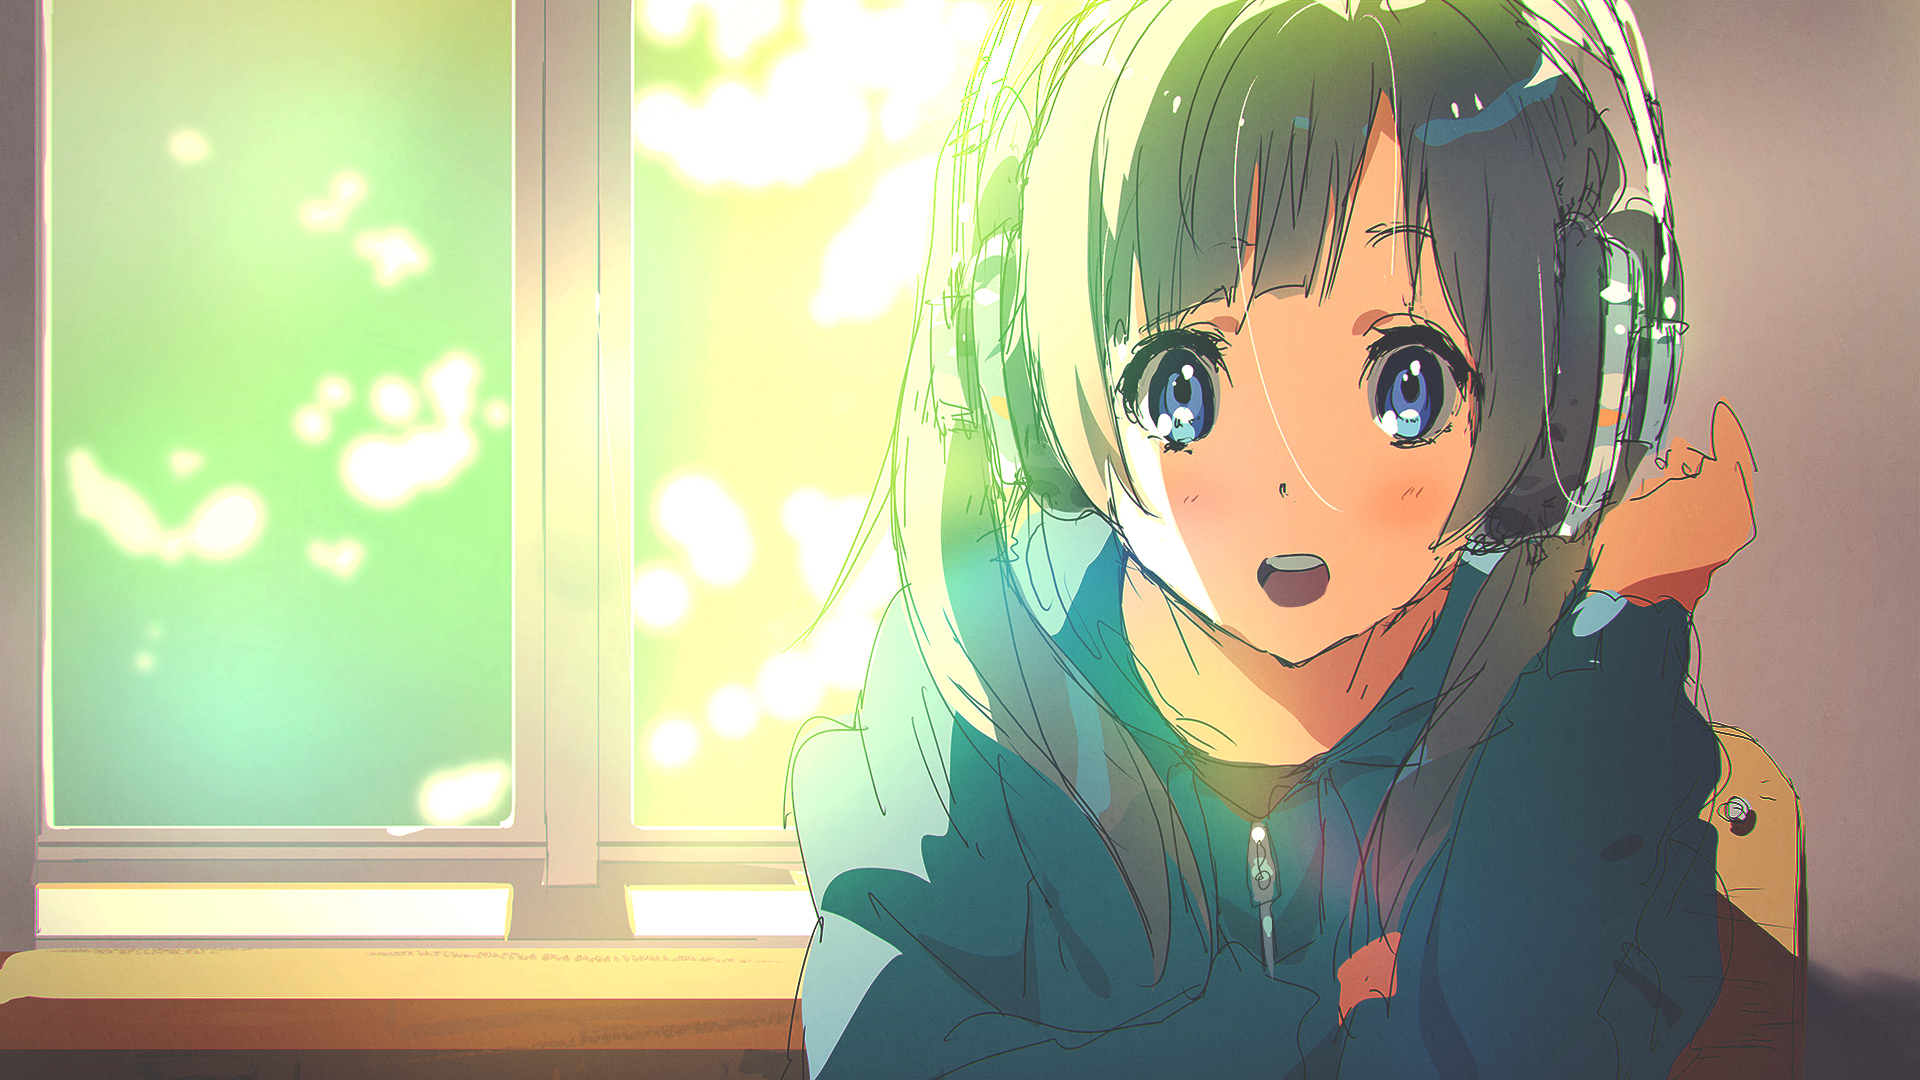 Desktop Wallpaper Cute Anime Girl Listening Songs Original Hd Image  Picture Background 4e8fe0